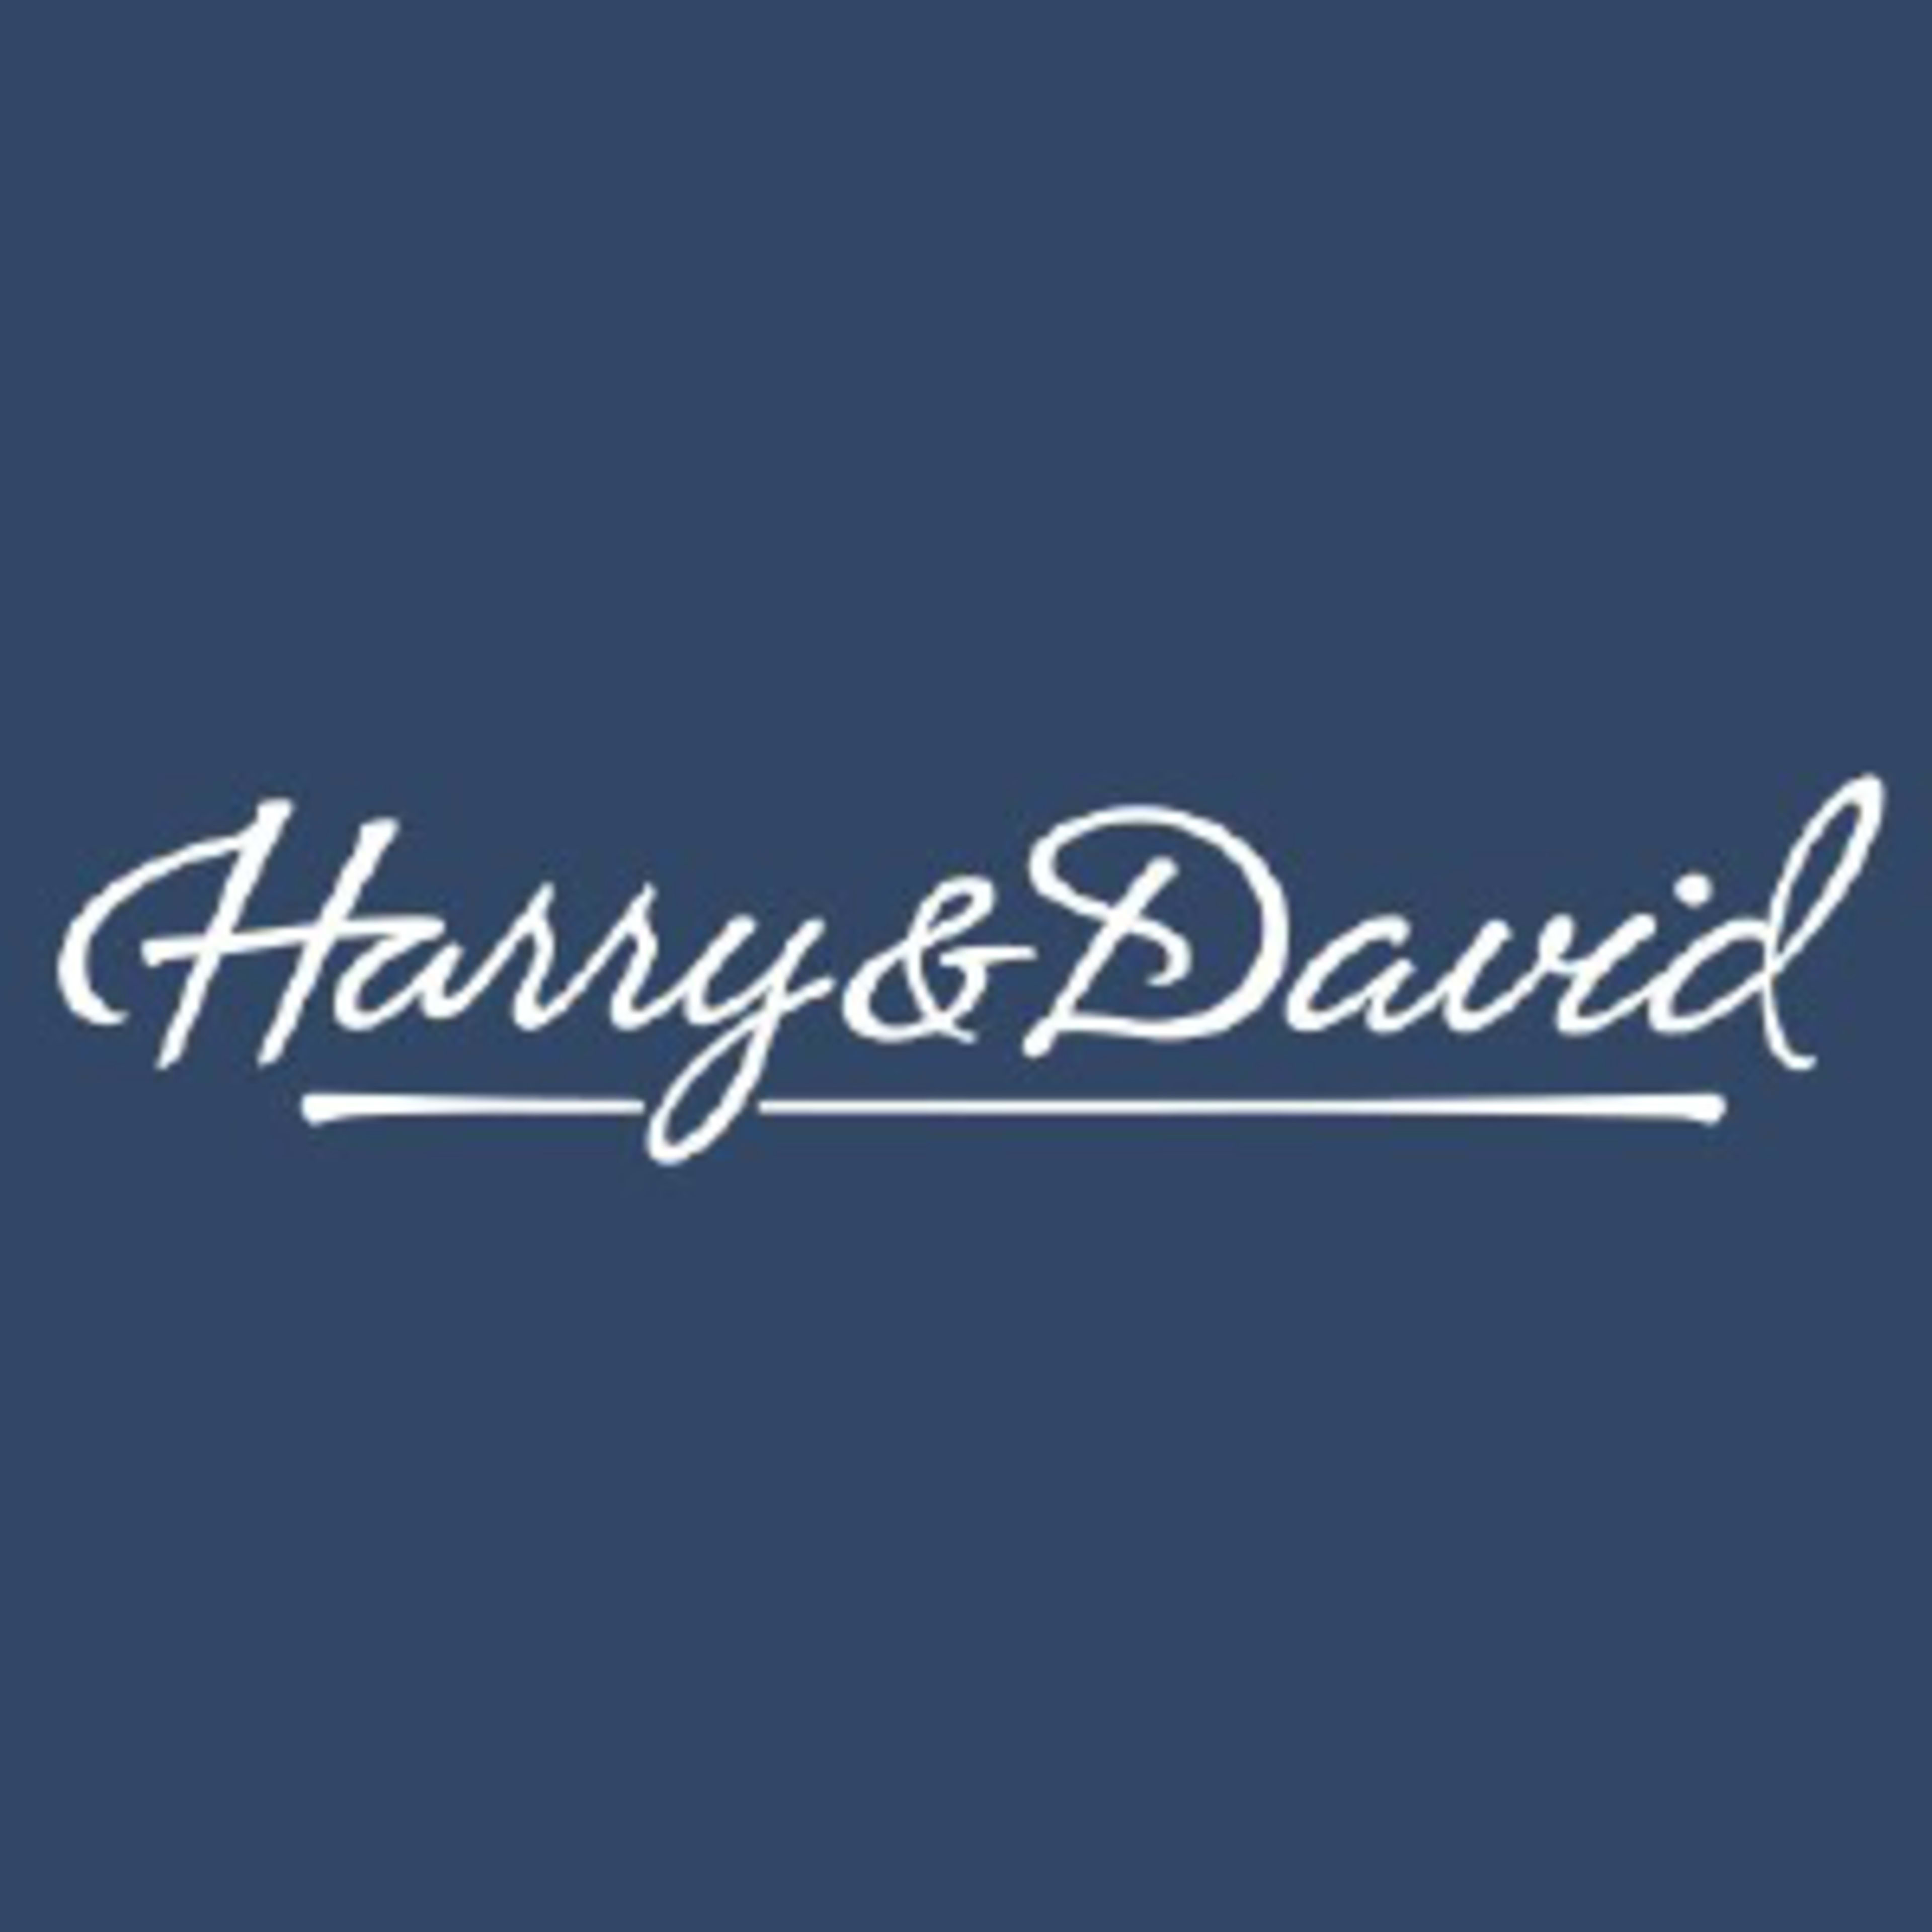 Harry & David Code